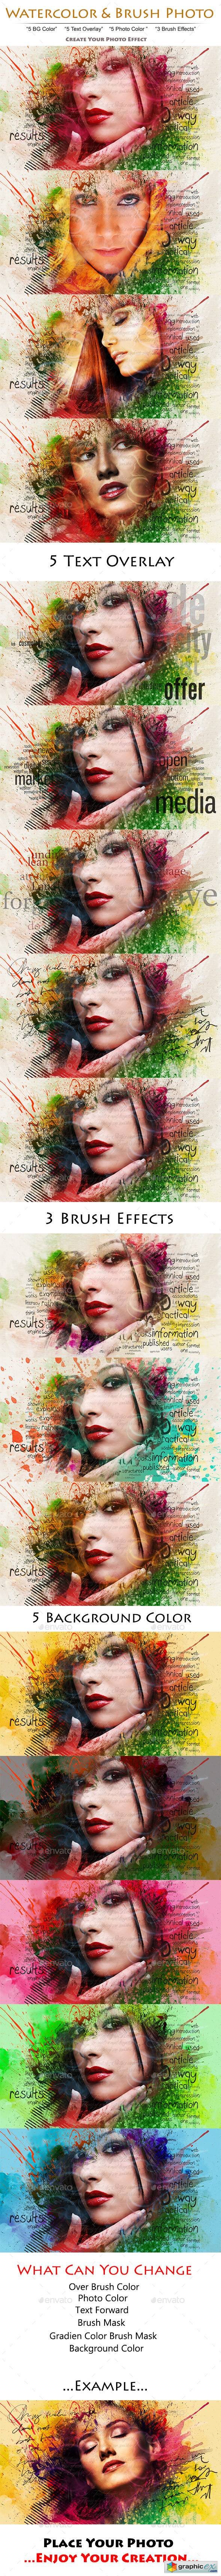 Watercolor & Brush Photo